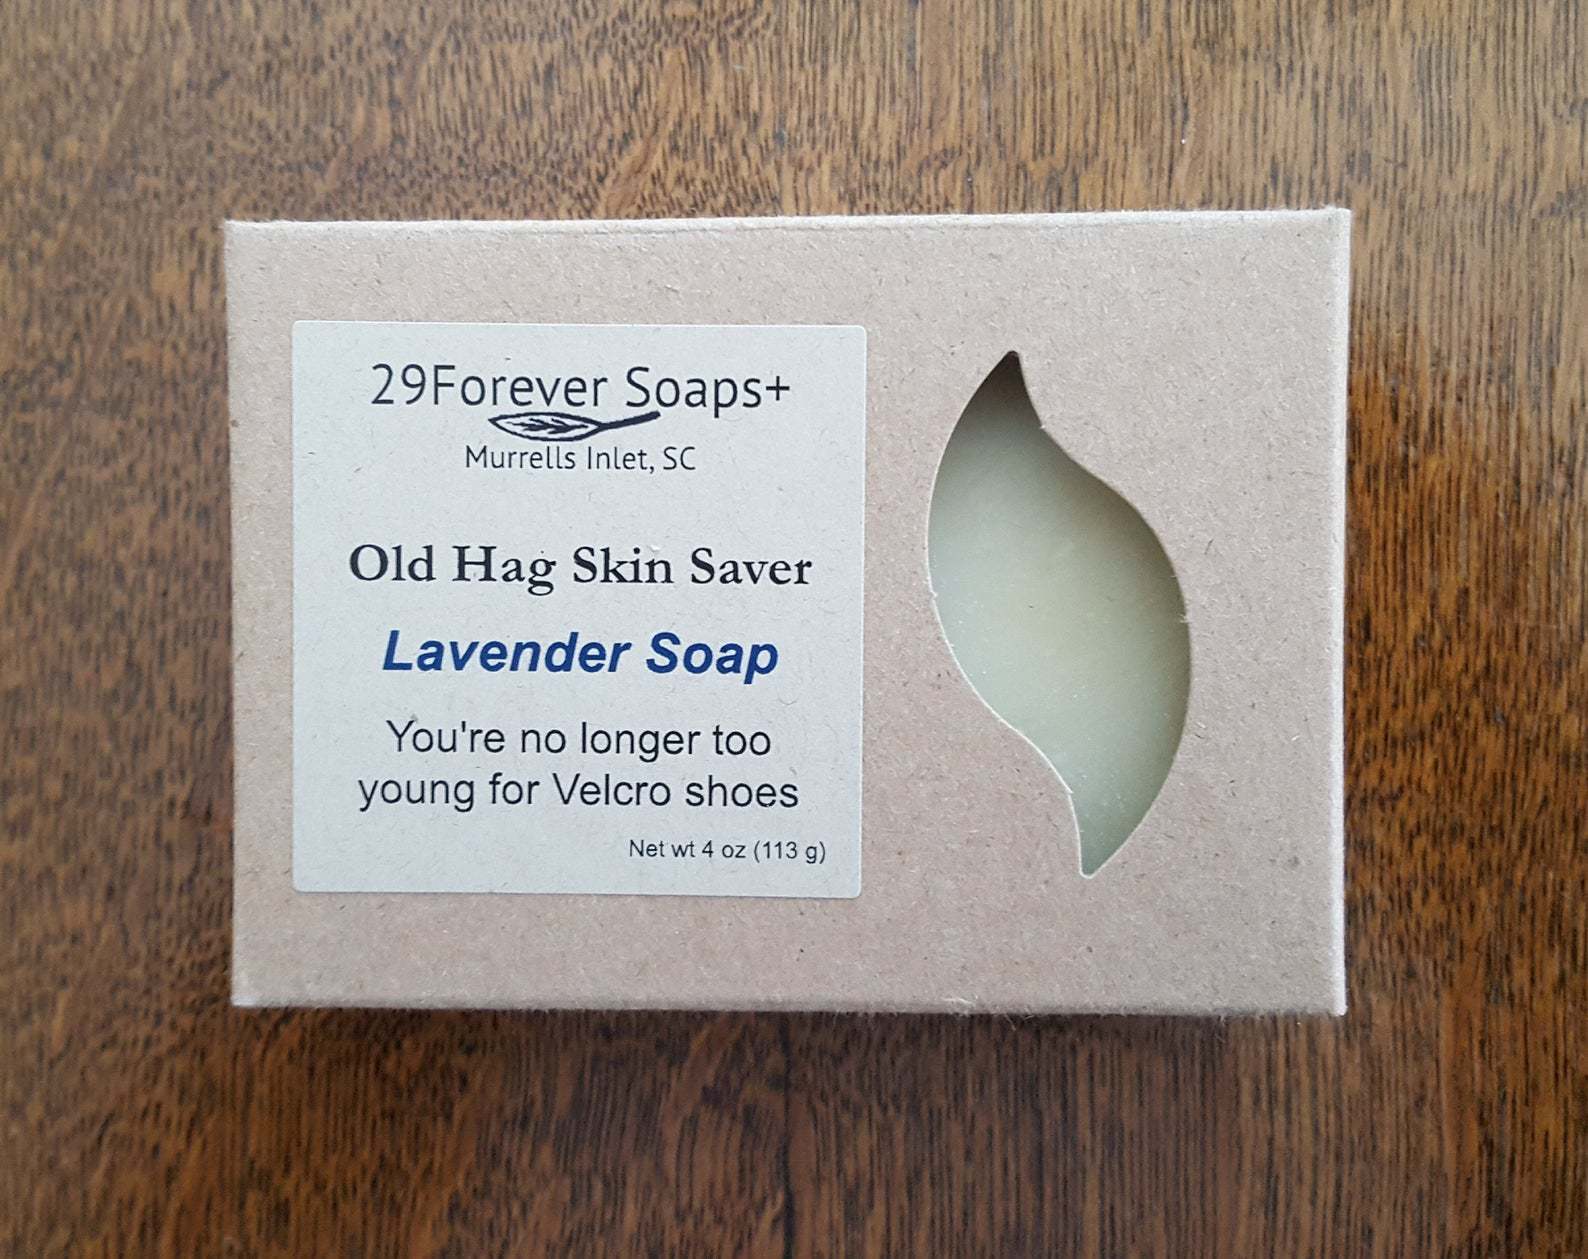 Old Hag Skin Saver lavender soap bar. 